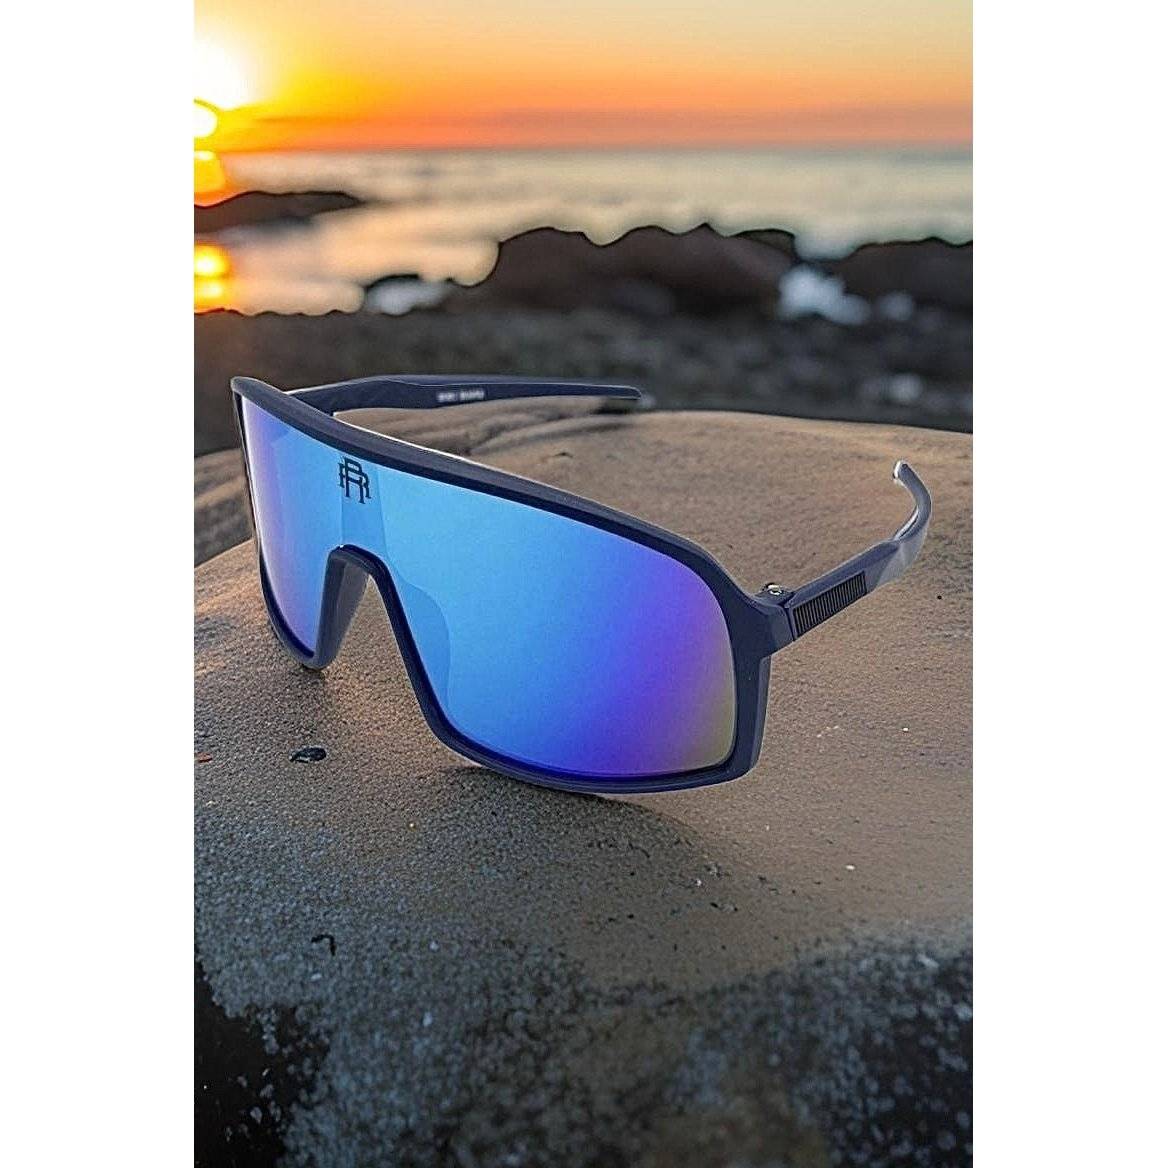 Yeti Navy Mirror Polarized Lens Sunglasses